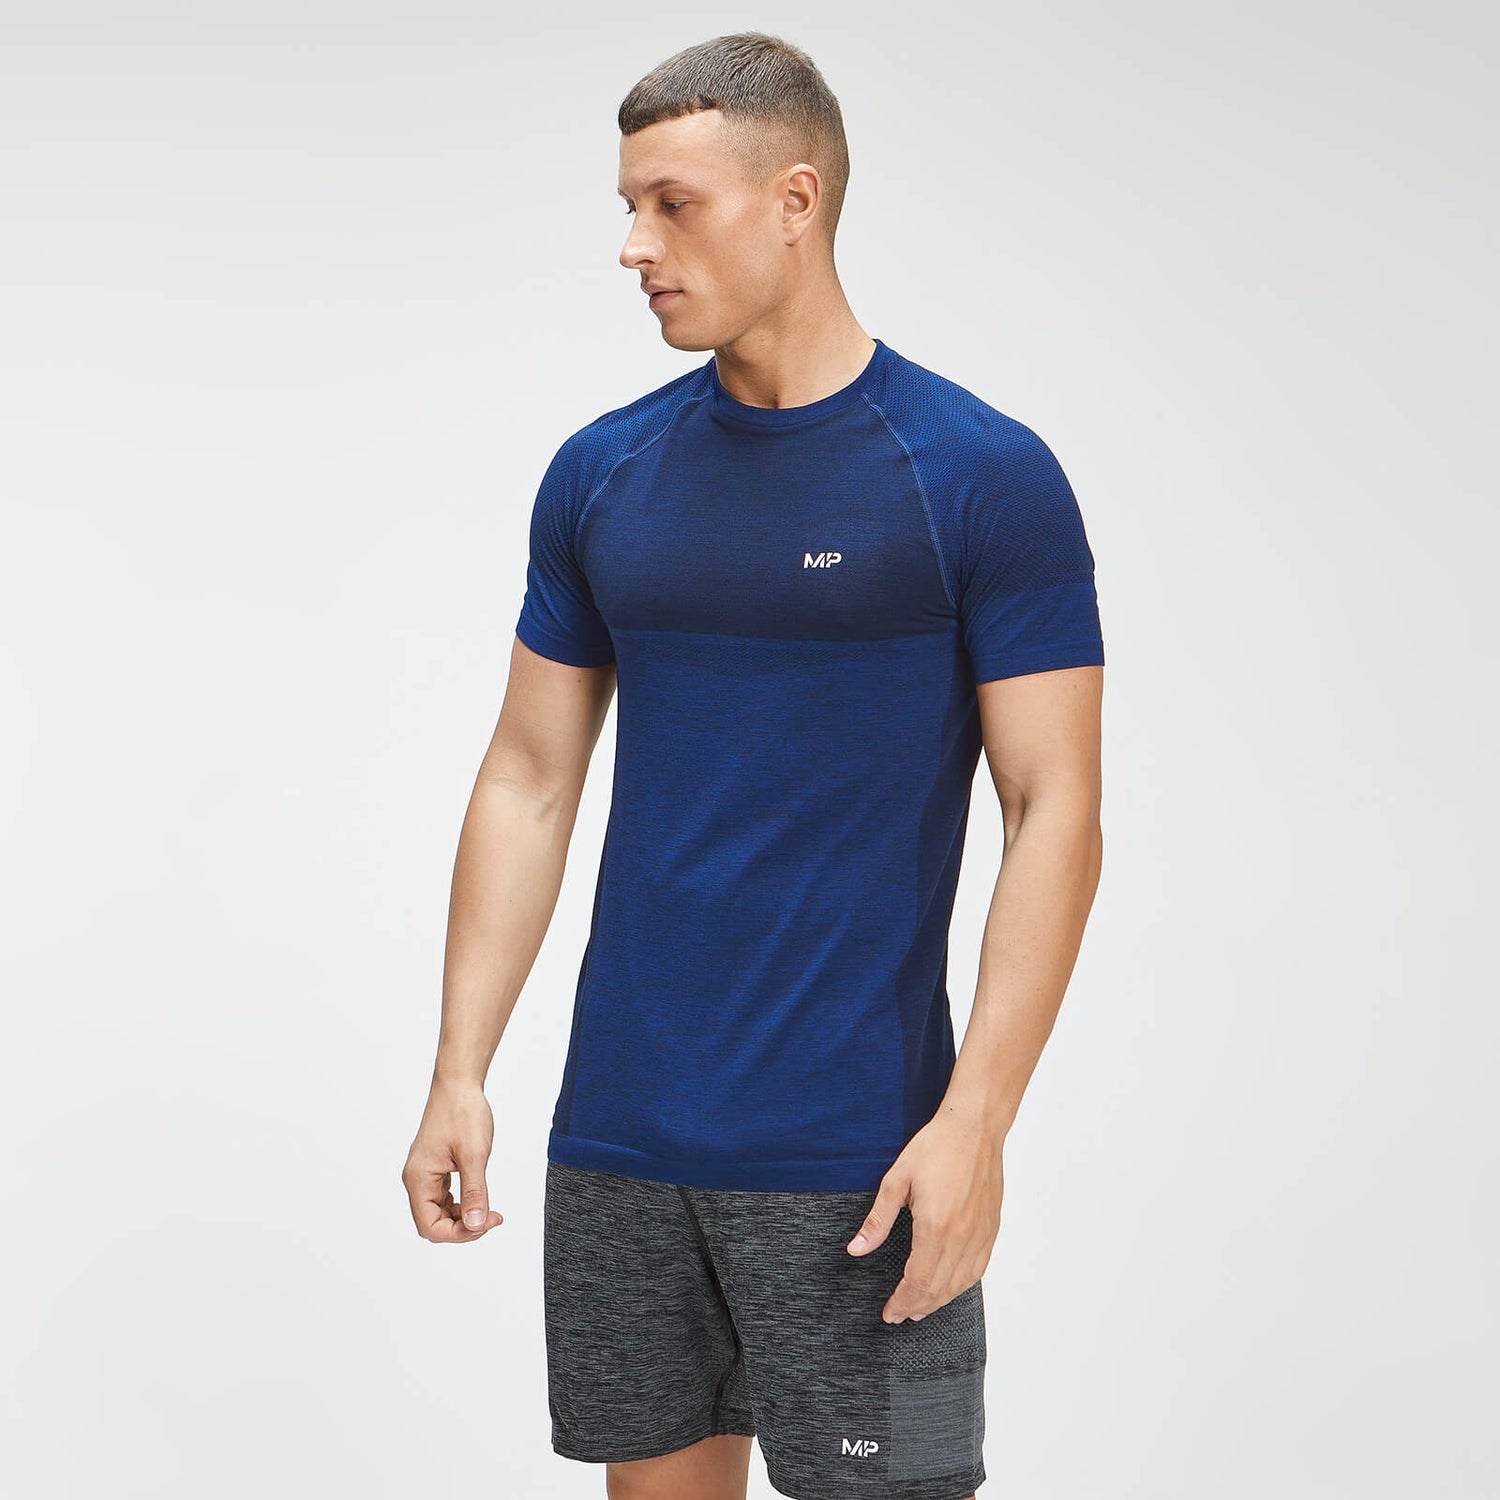 MP Herren Essential Seamless Kurzarm-T-Shirt — Intensives Blau Mergel - XS